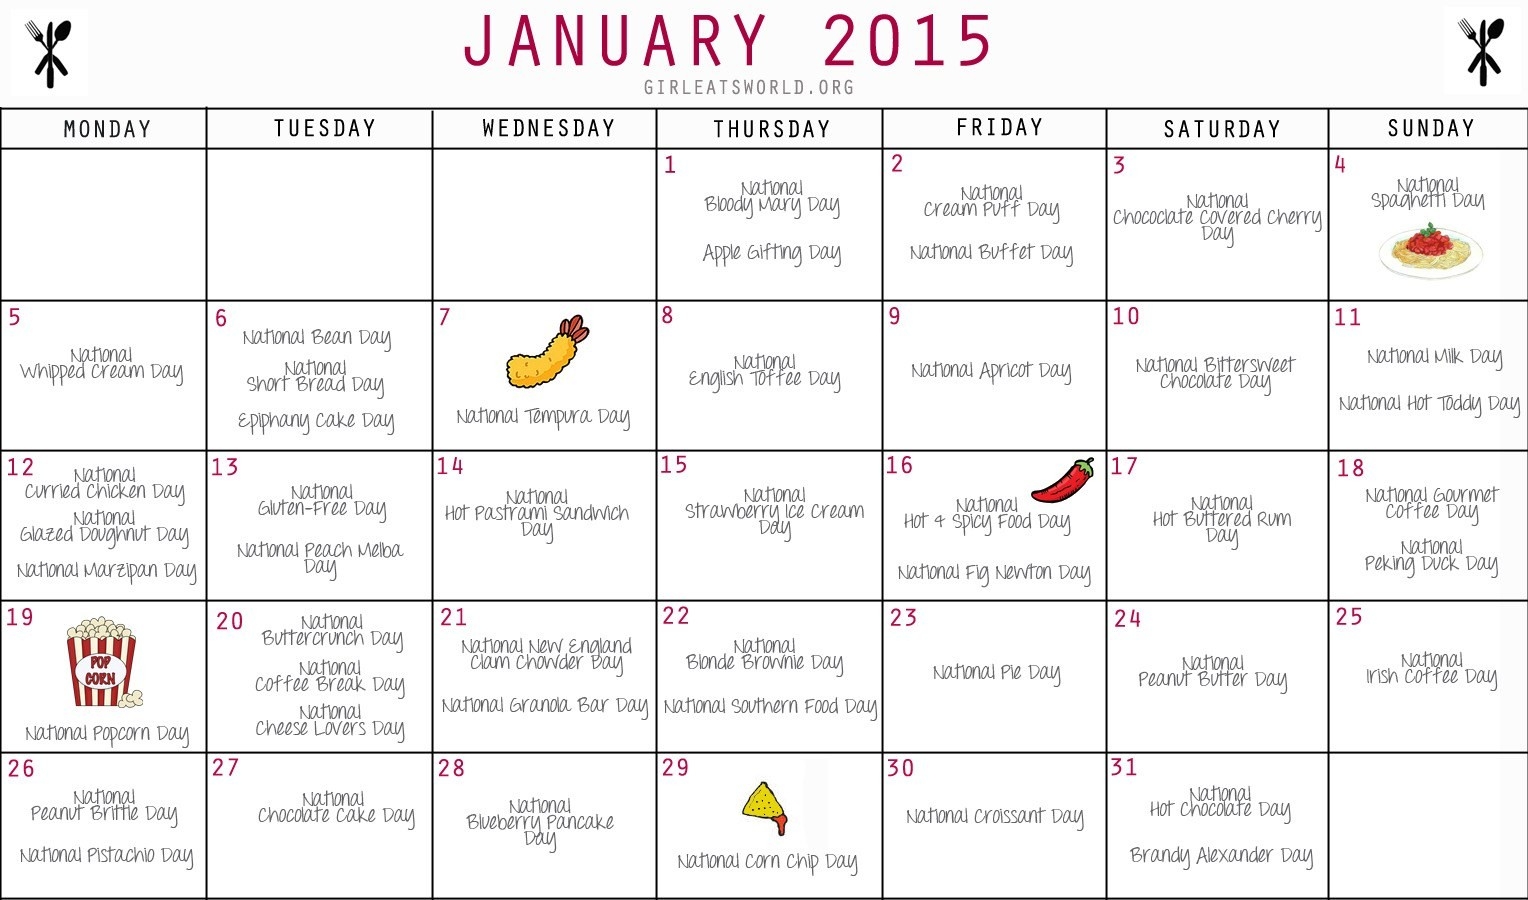 National Food Holidays January 2015 | Girl Eats World-Calendar Of National Food Holidays